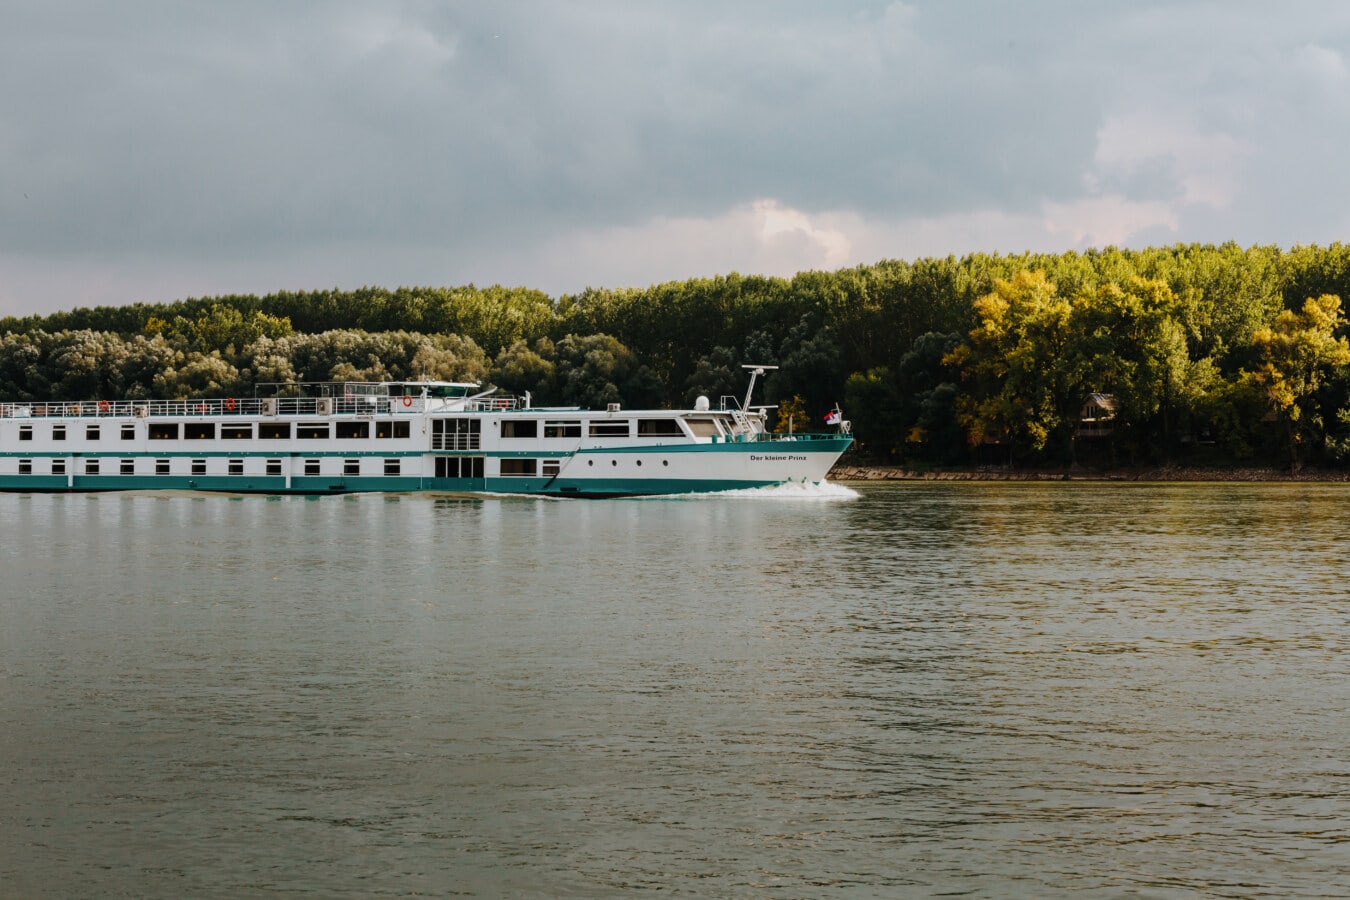 kapal pesiar, kapal, Sungai Danube, sungai, kapal penjelajah, objek wisata, Pariwisata, ekowisata, air, Danau